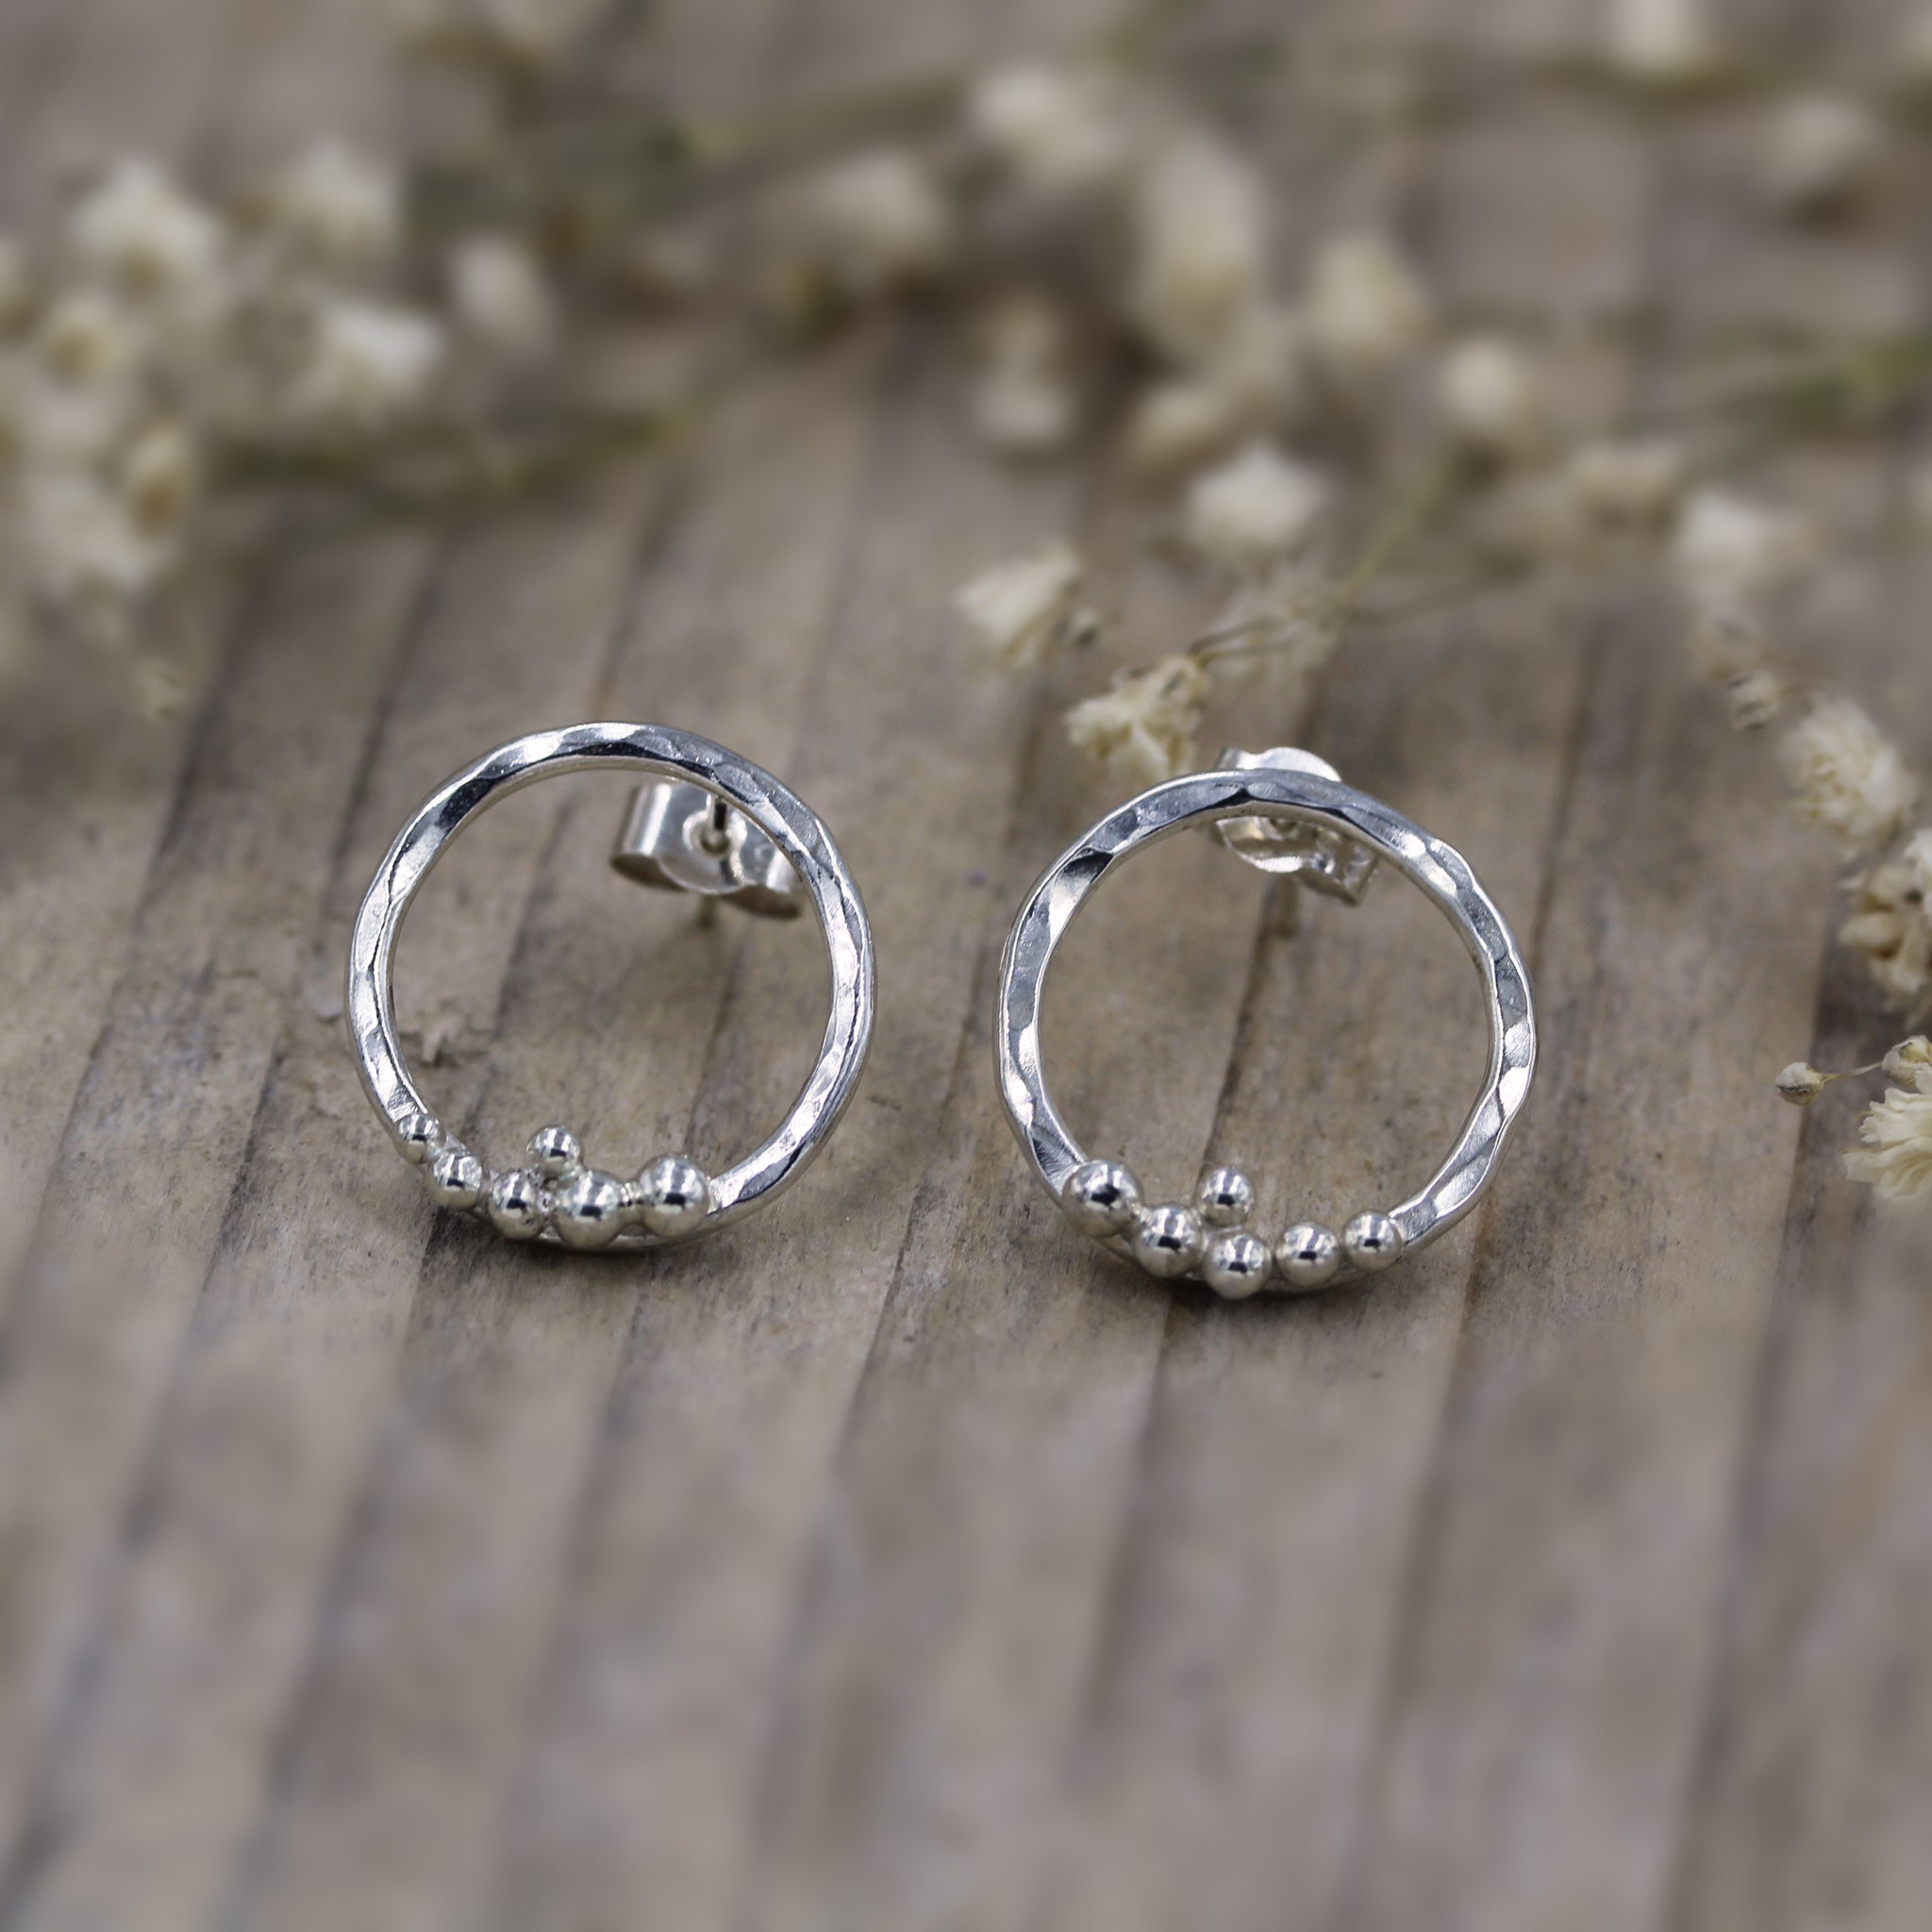 Sea inspired stud earrings handmade in 100% recycled silver by Gemma Tremayne Jewellery